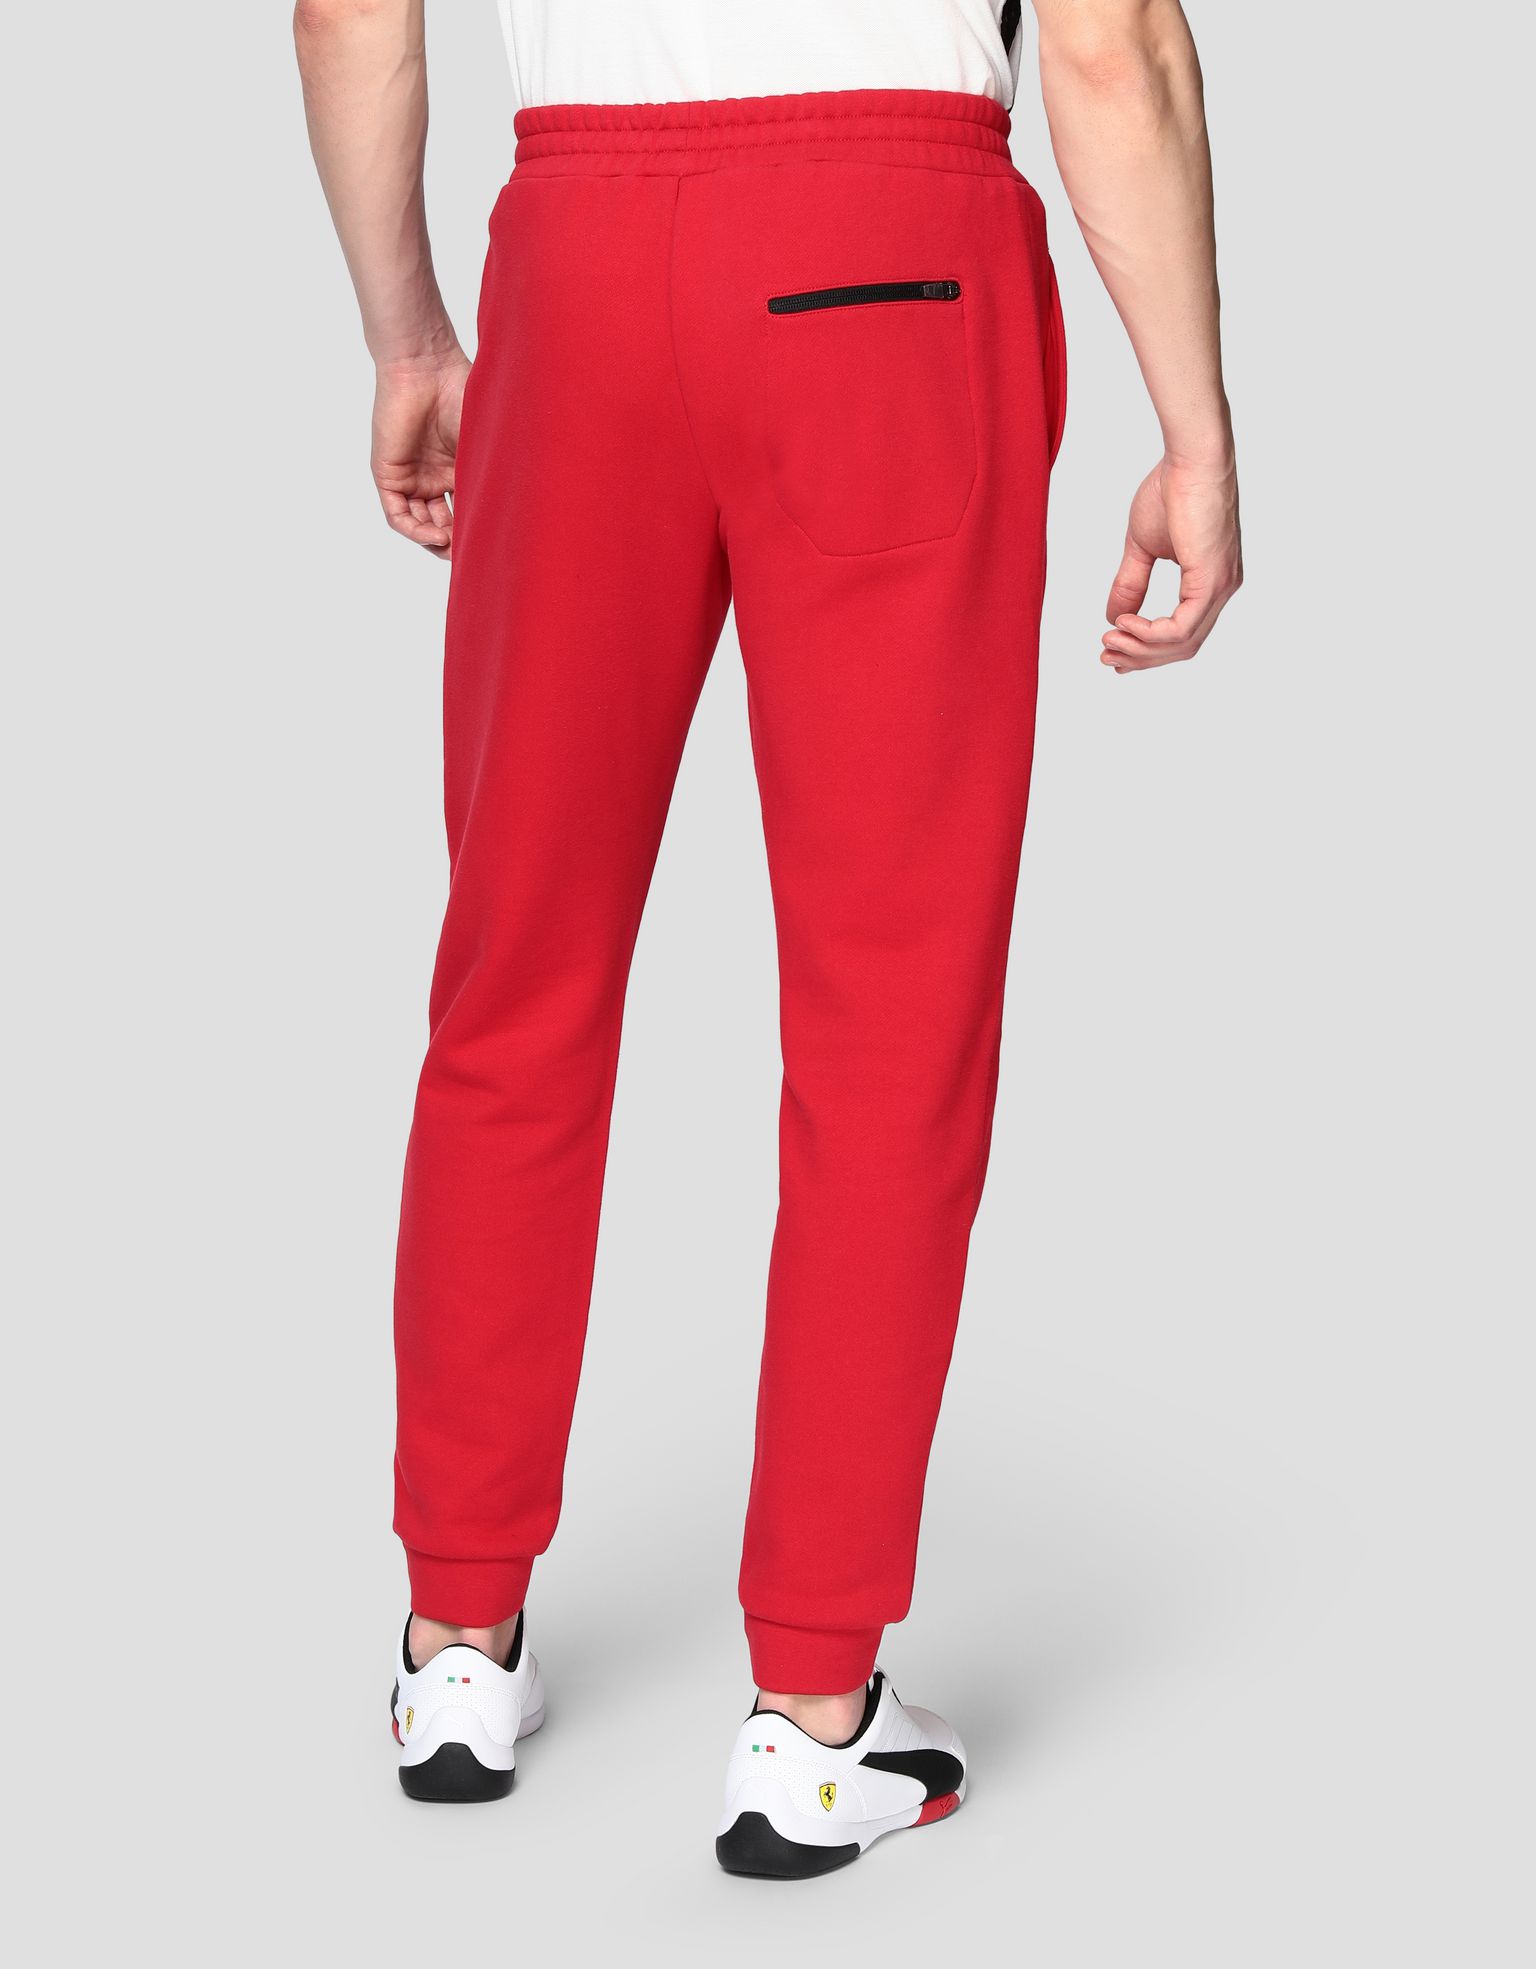 Ferrari Men’s fleece jogging trousers Man | Scuderia Ferrari Official Store